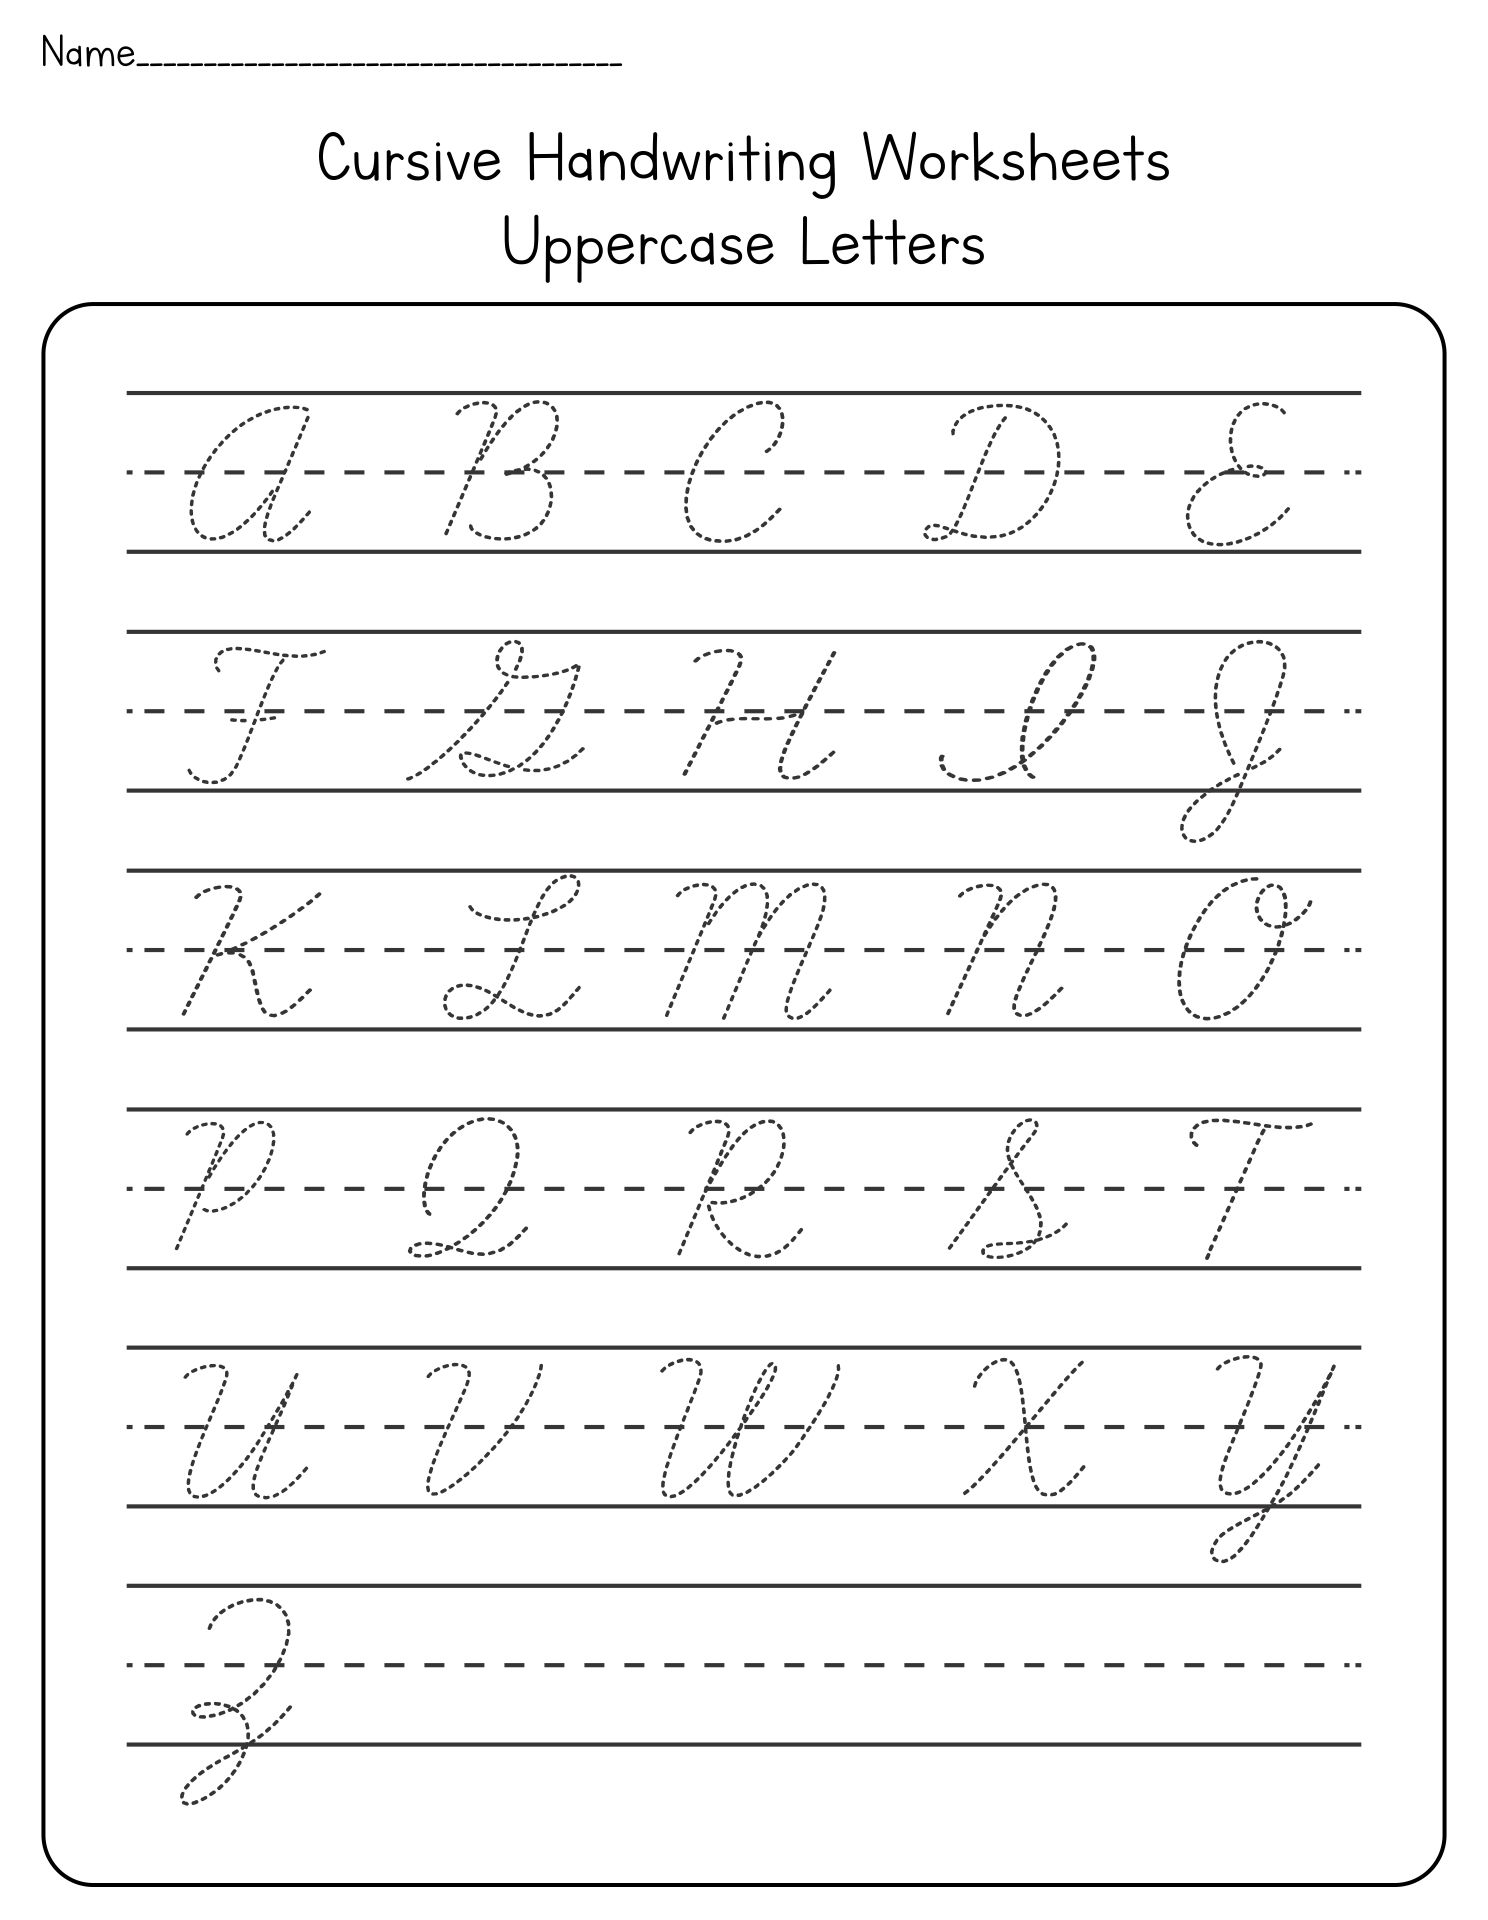 17+ Free Printable Cursive Handwriting Worksheets Photos - Worksheet